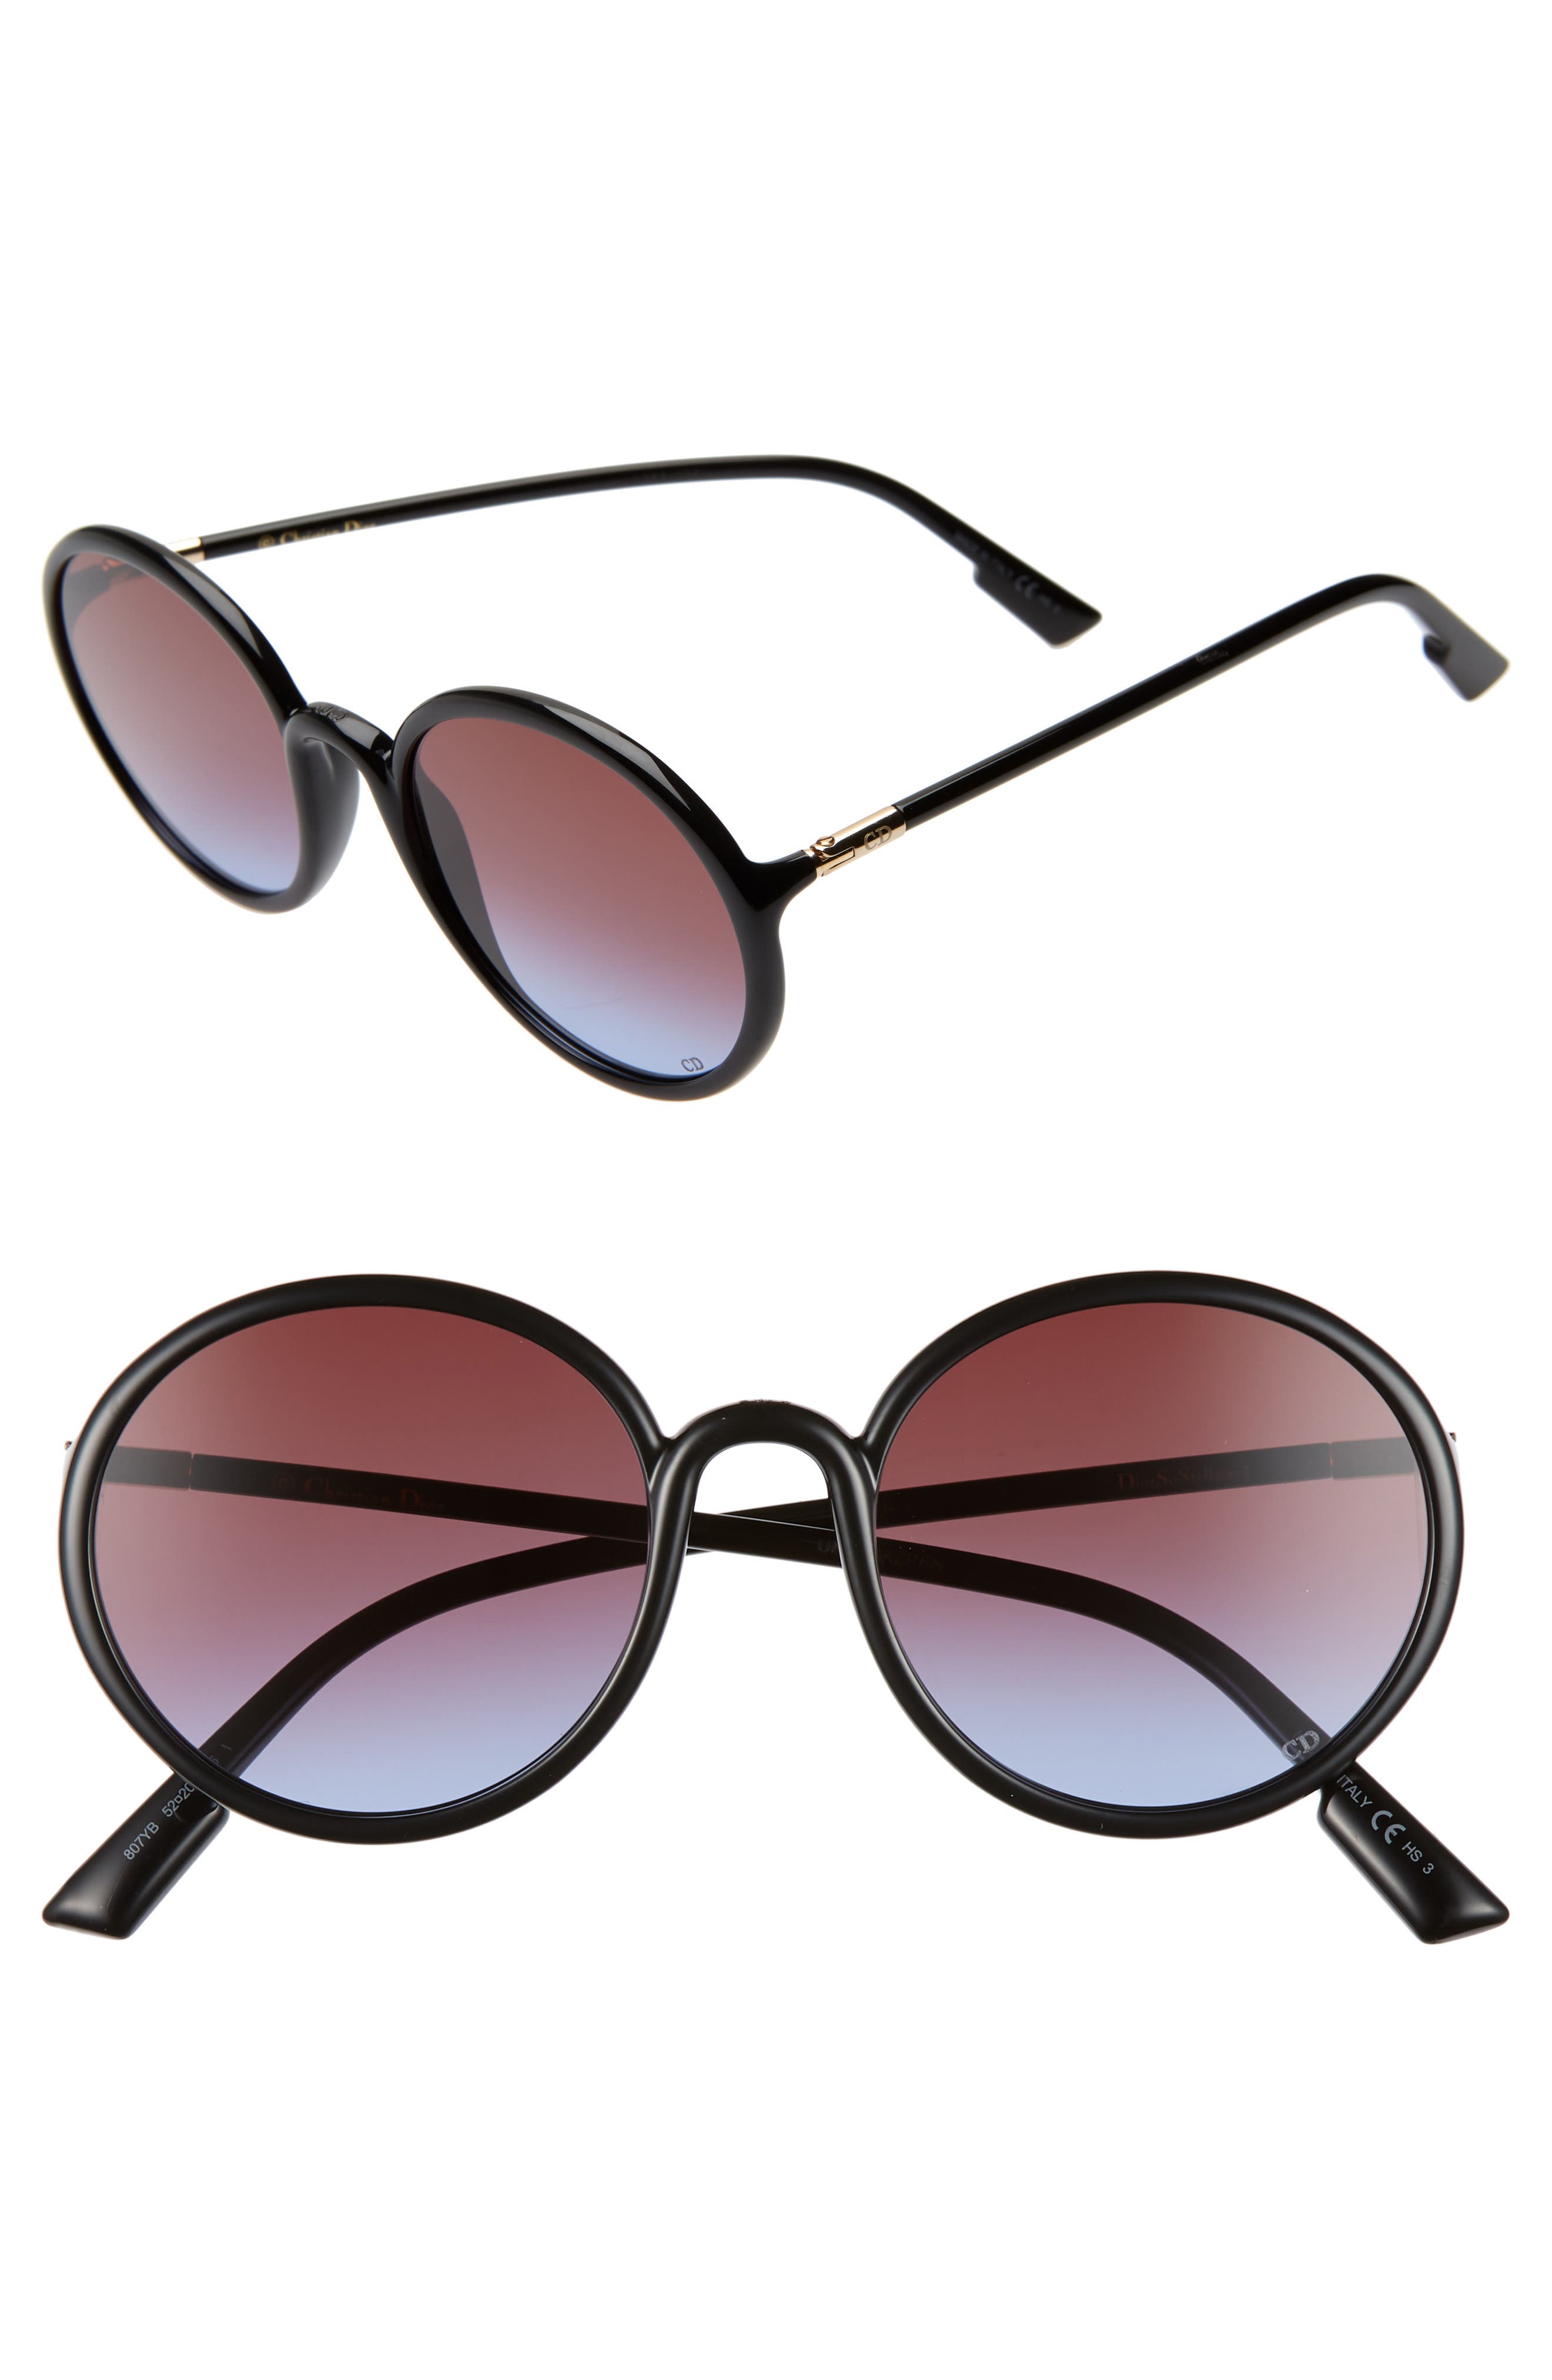 Dior Round Eyeglass Frames For Sale Ebay